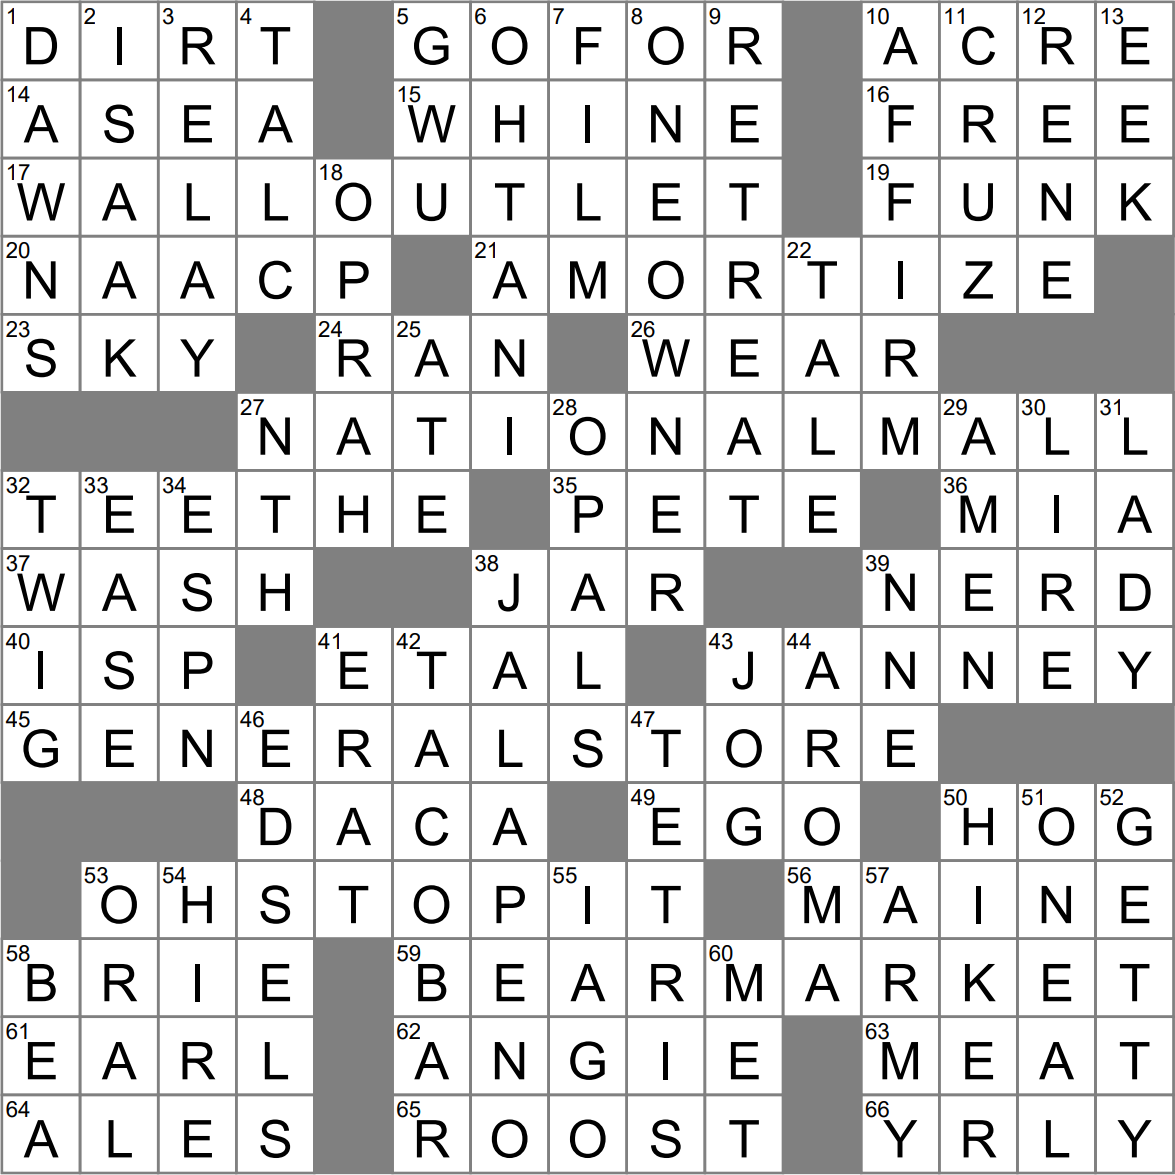 LA Times Crossword 22 Aug 23 Tuesday LAXCrossword com